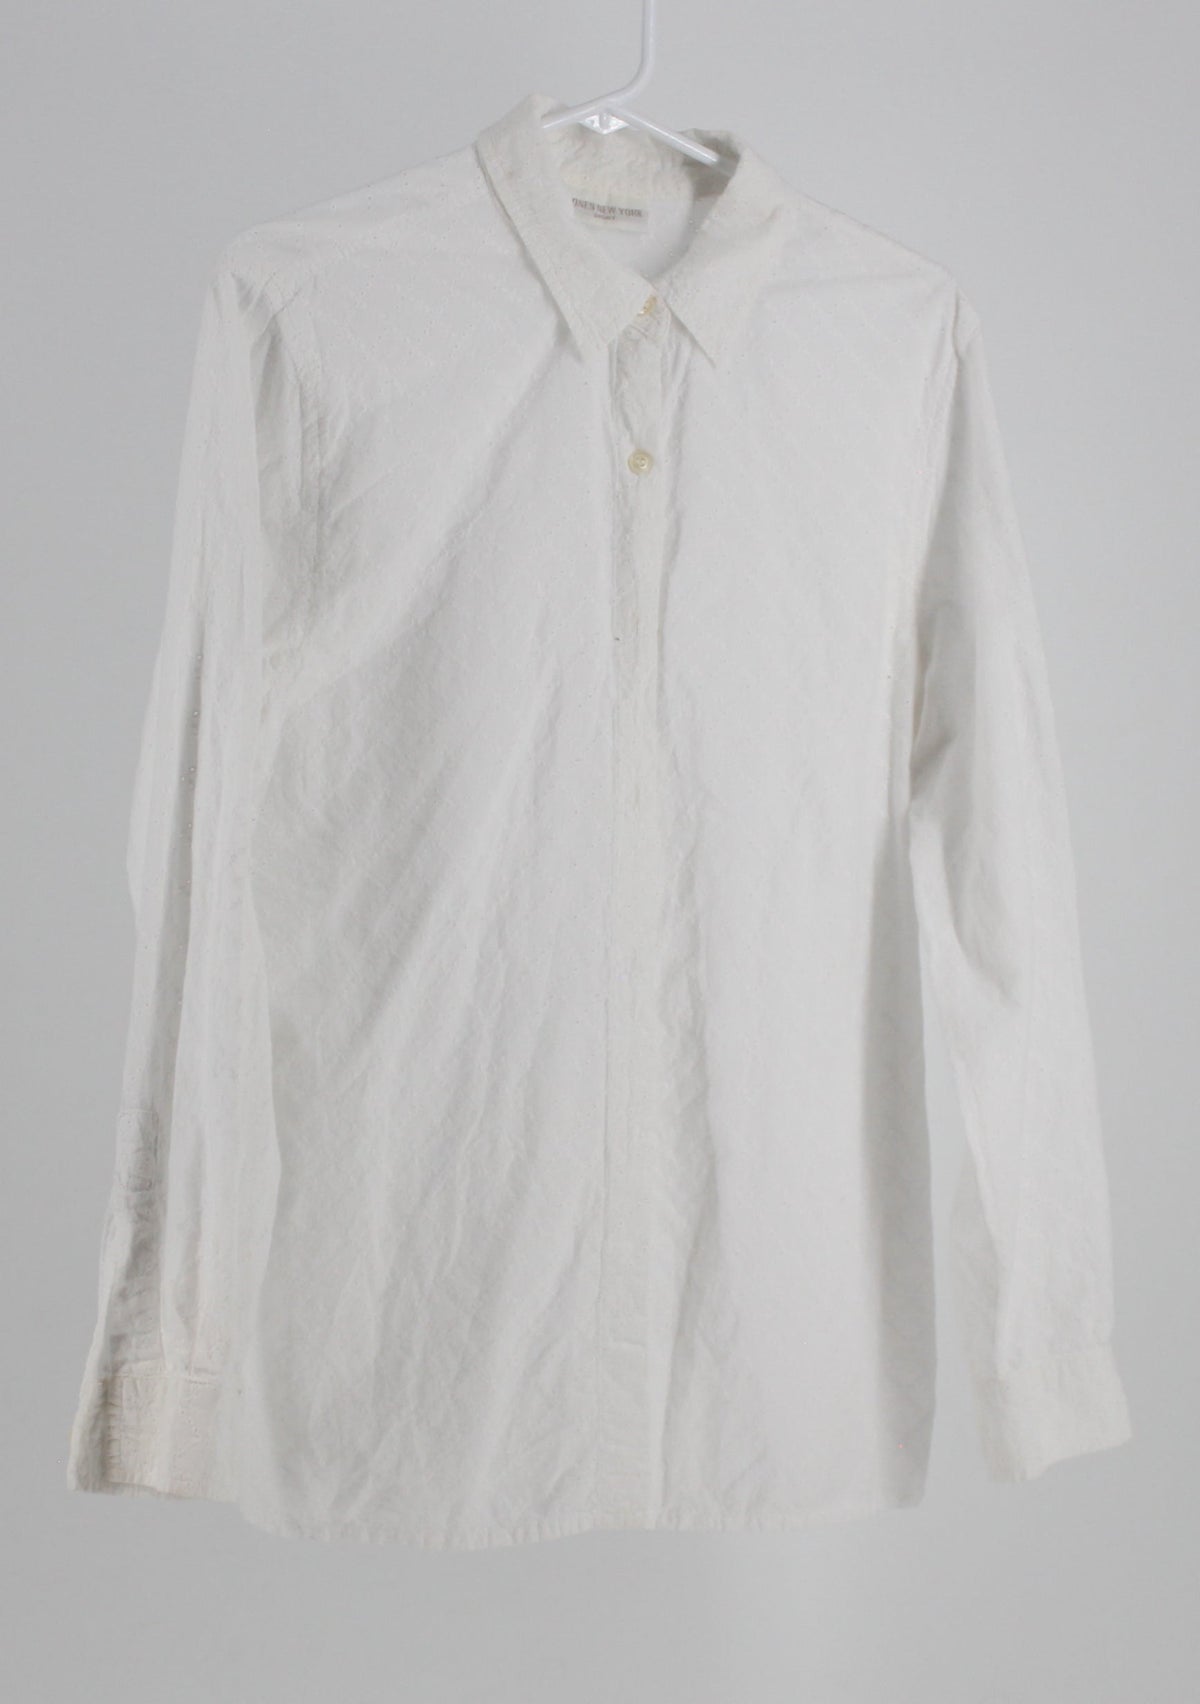 Jones New York Sport white patterned long sleeve button up shirt